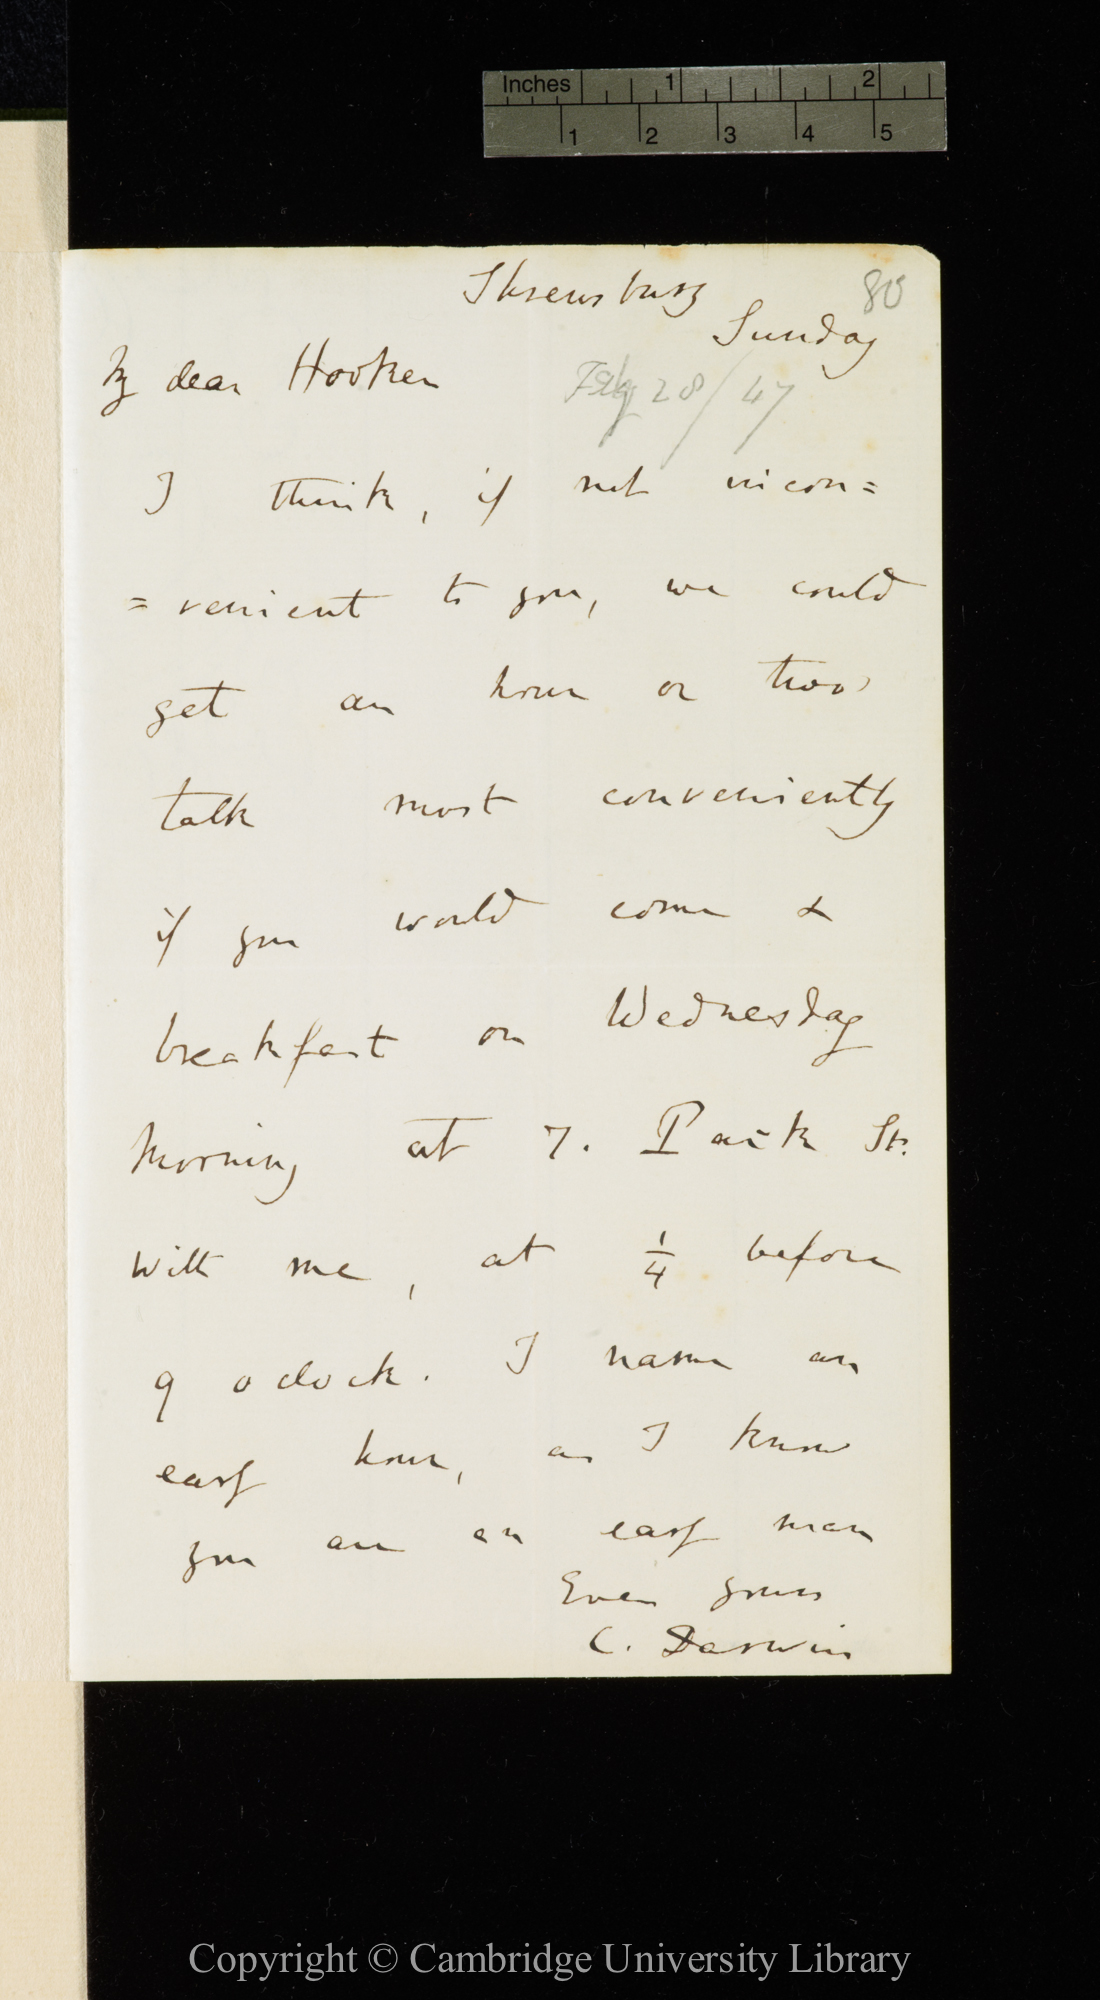 Letter from C. R. Darwin to J. D. Hooker   [28 February 1847]